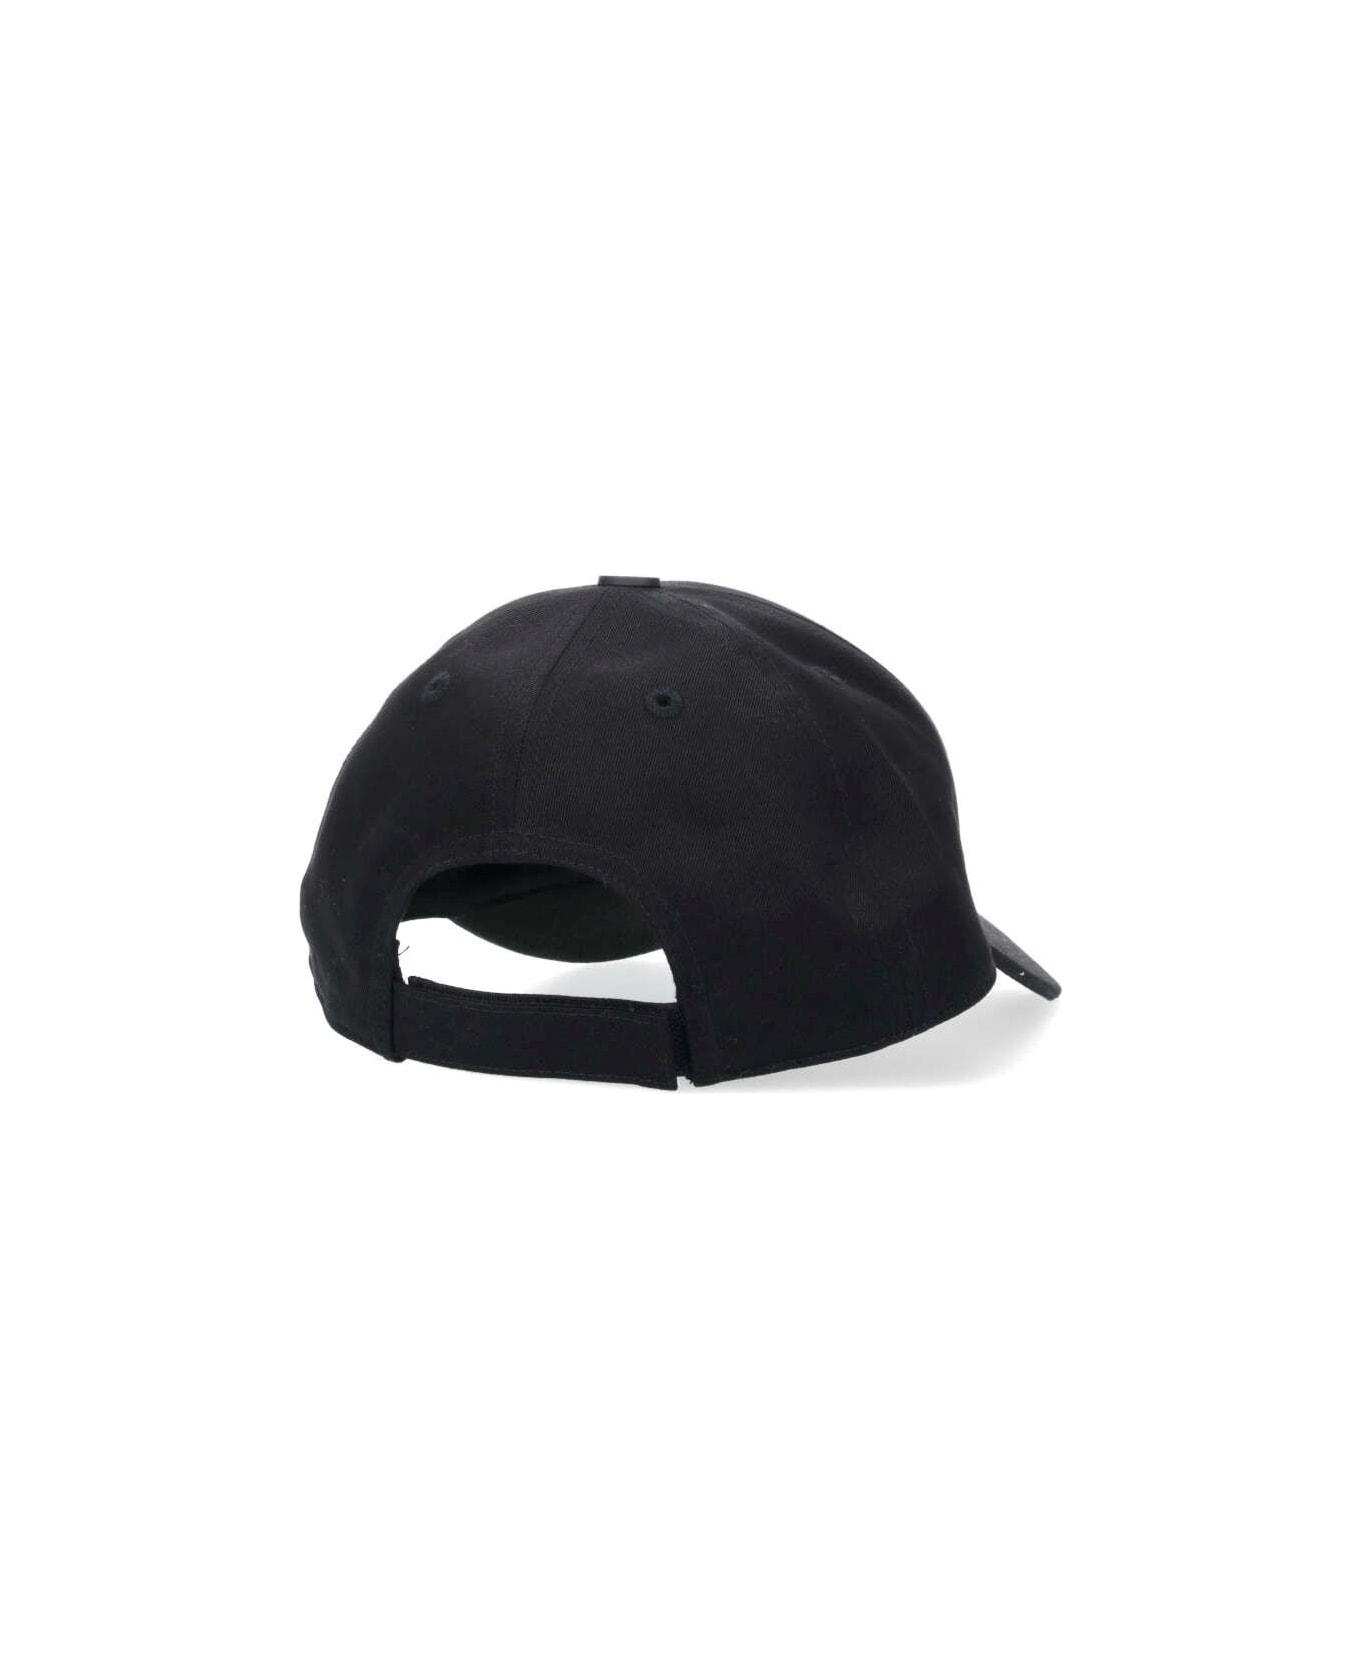 Mugler Logo Baseball Cap - Black